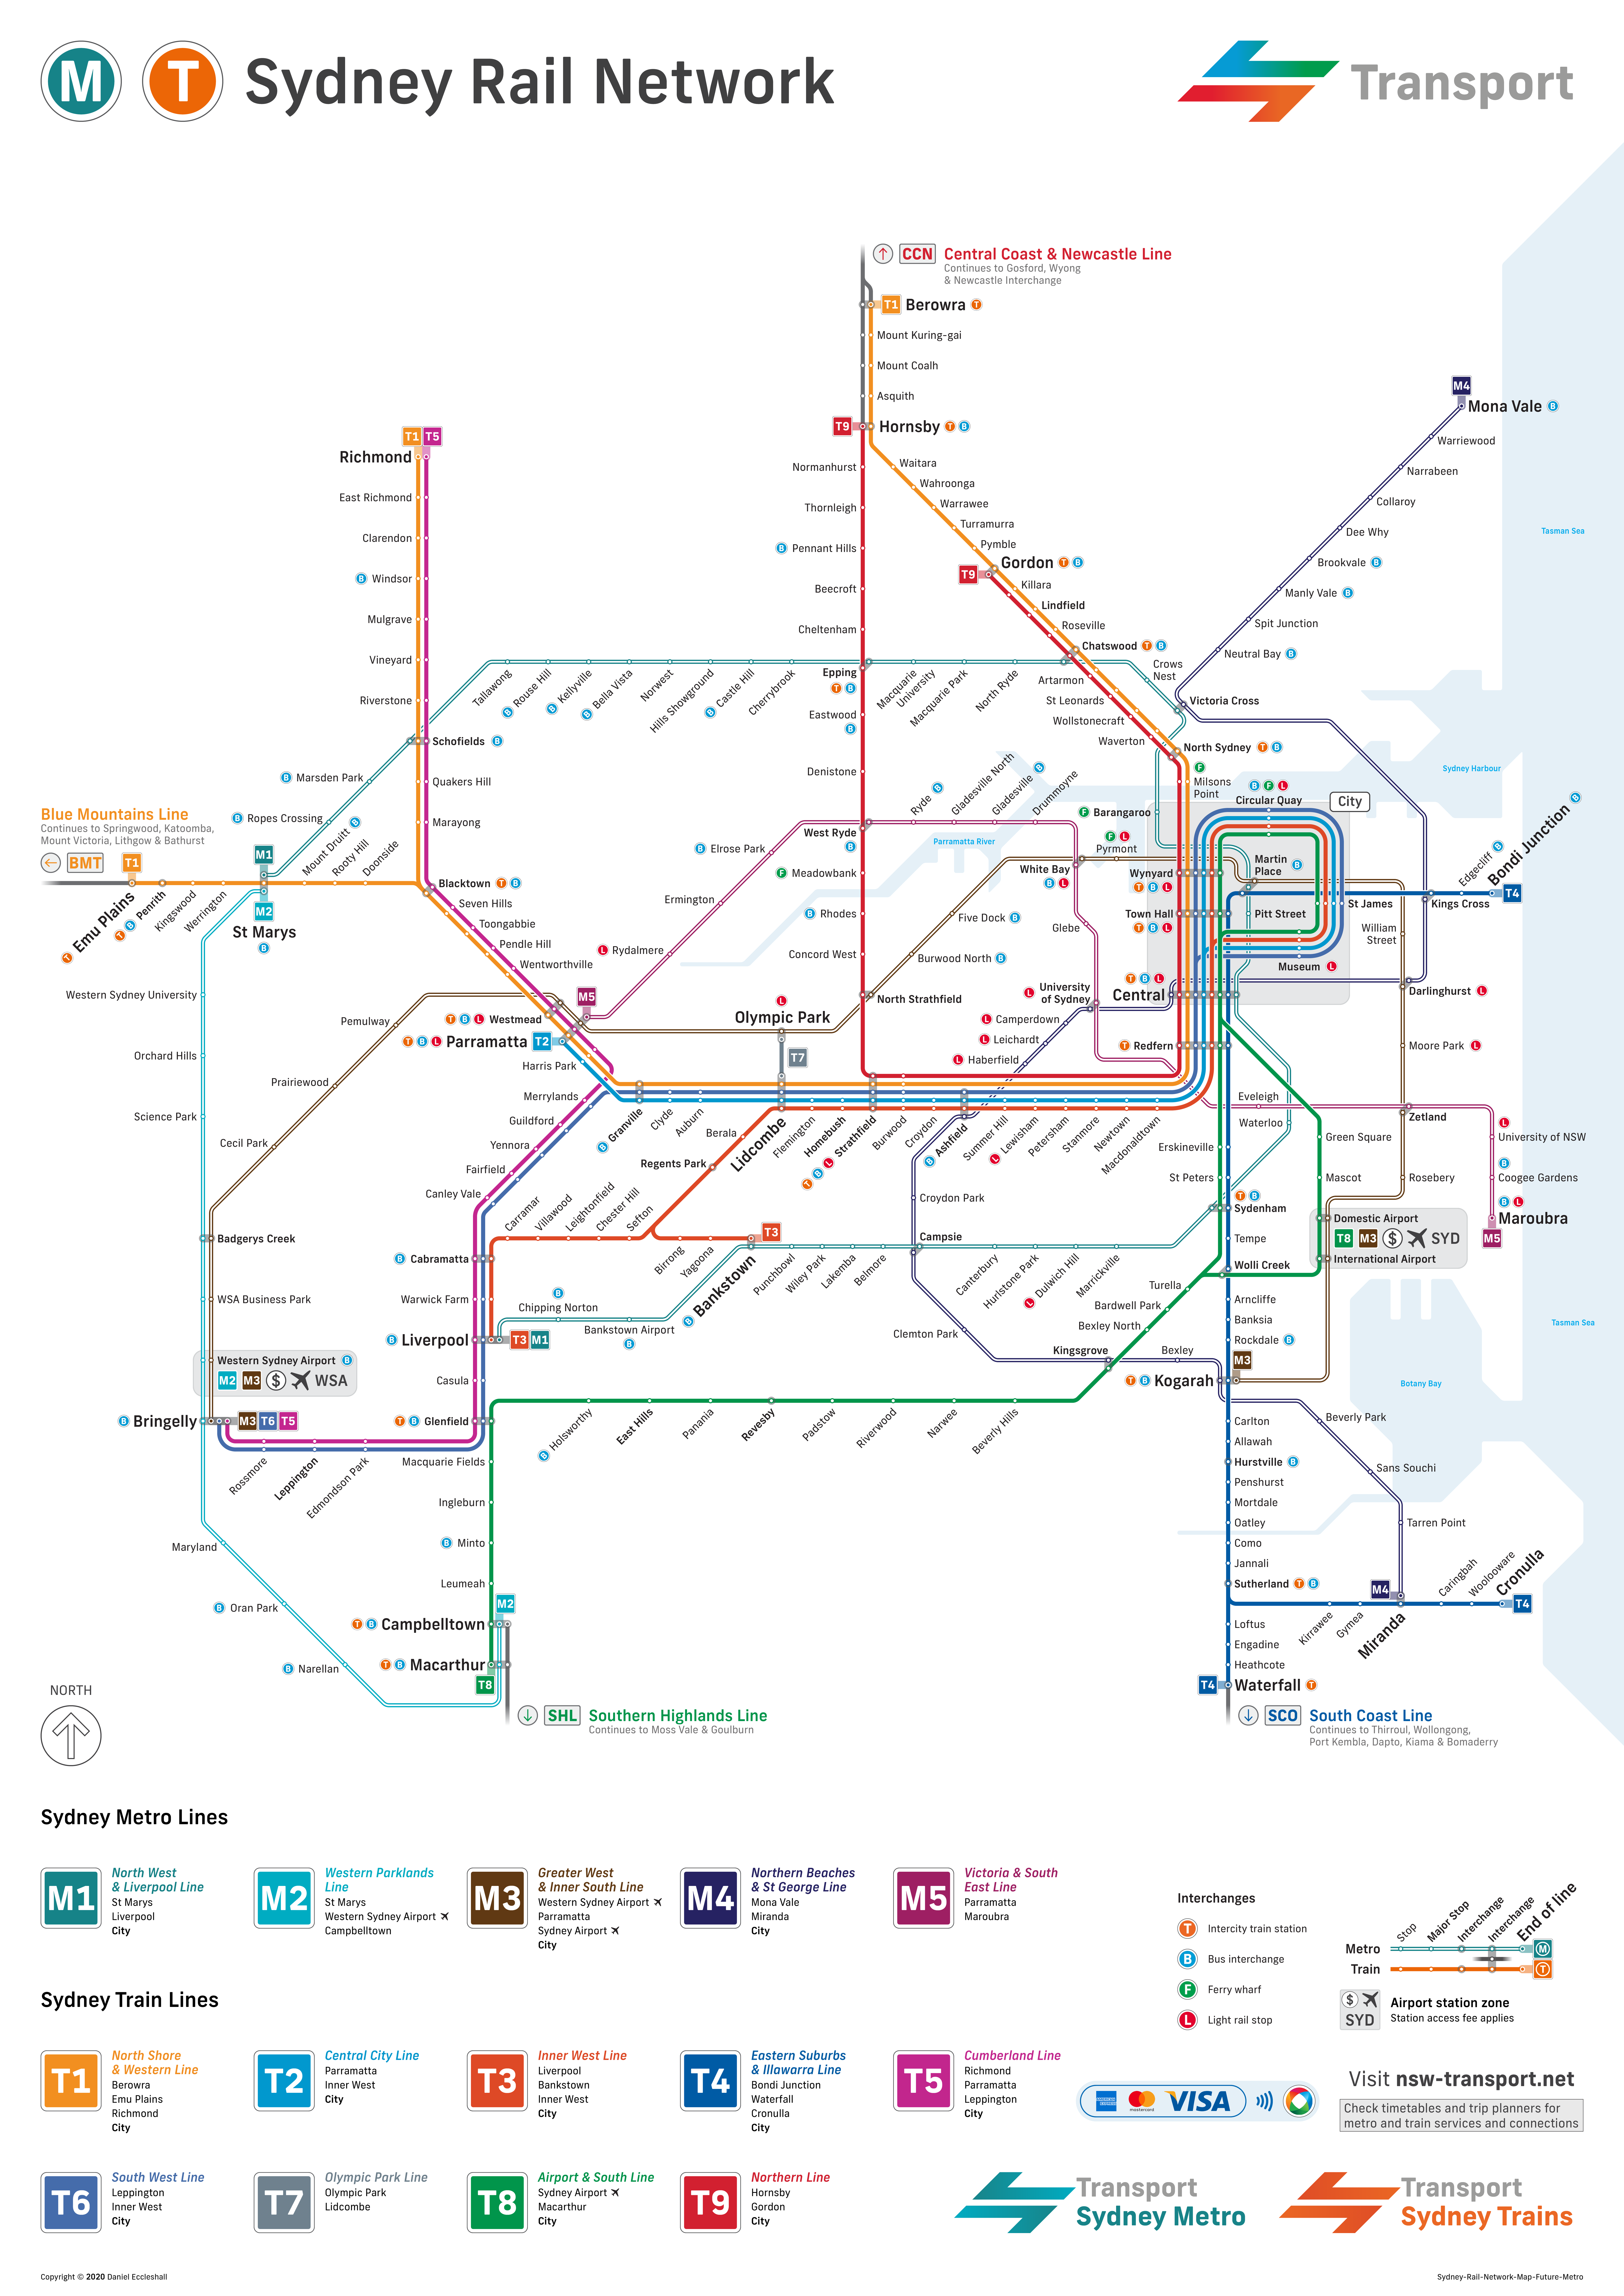 sydney-rail-network-metro-future-01.png